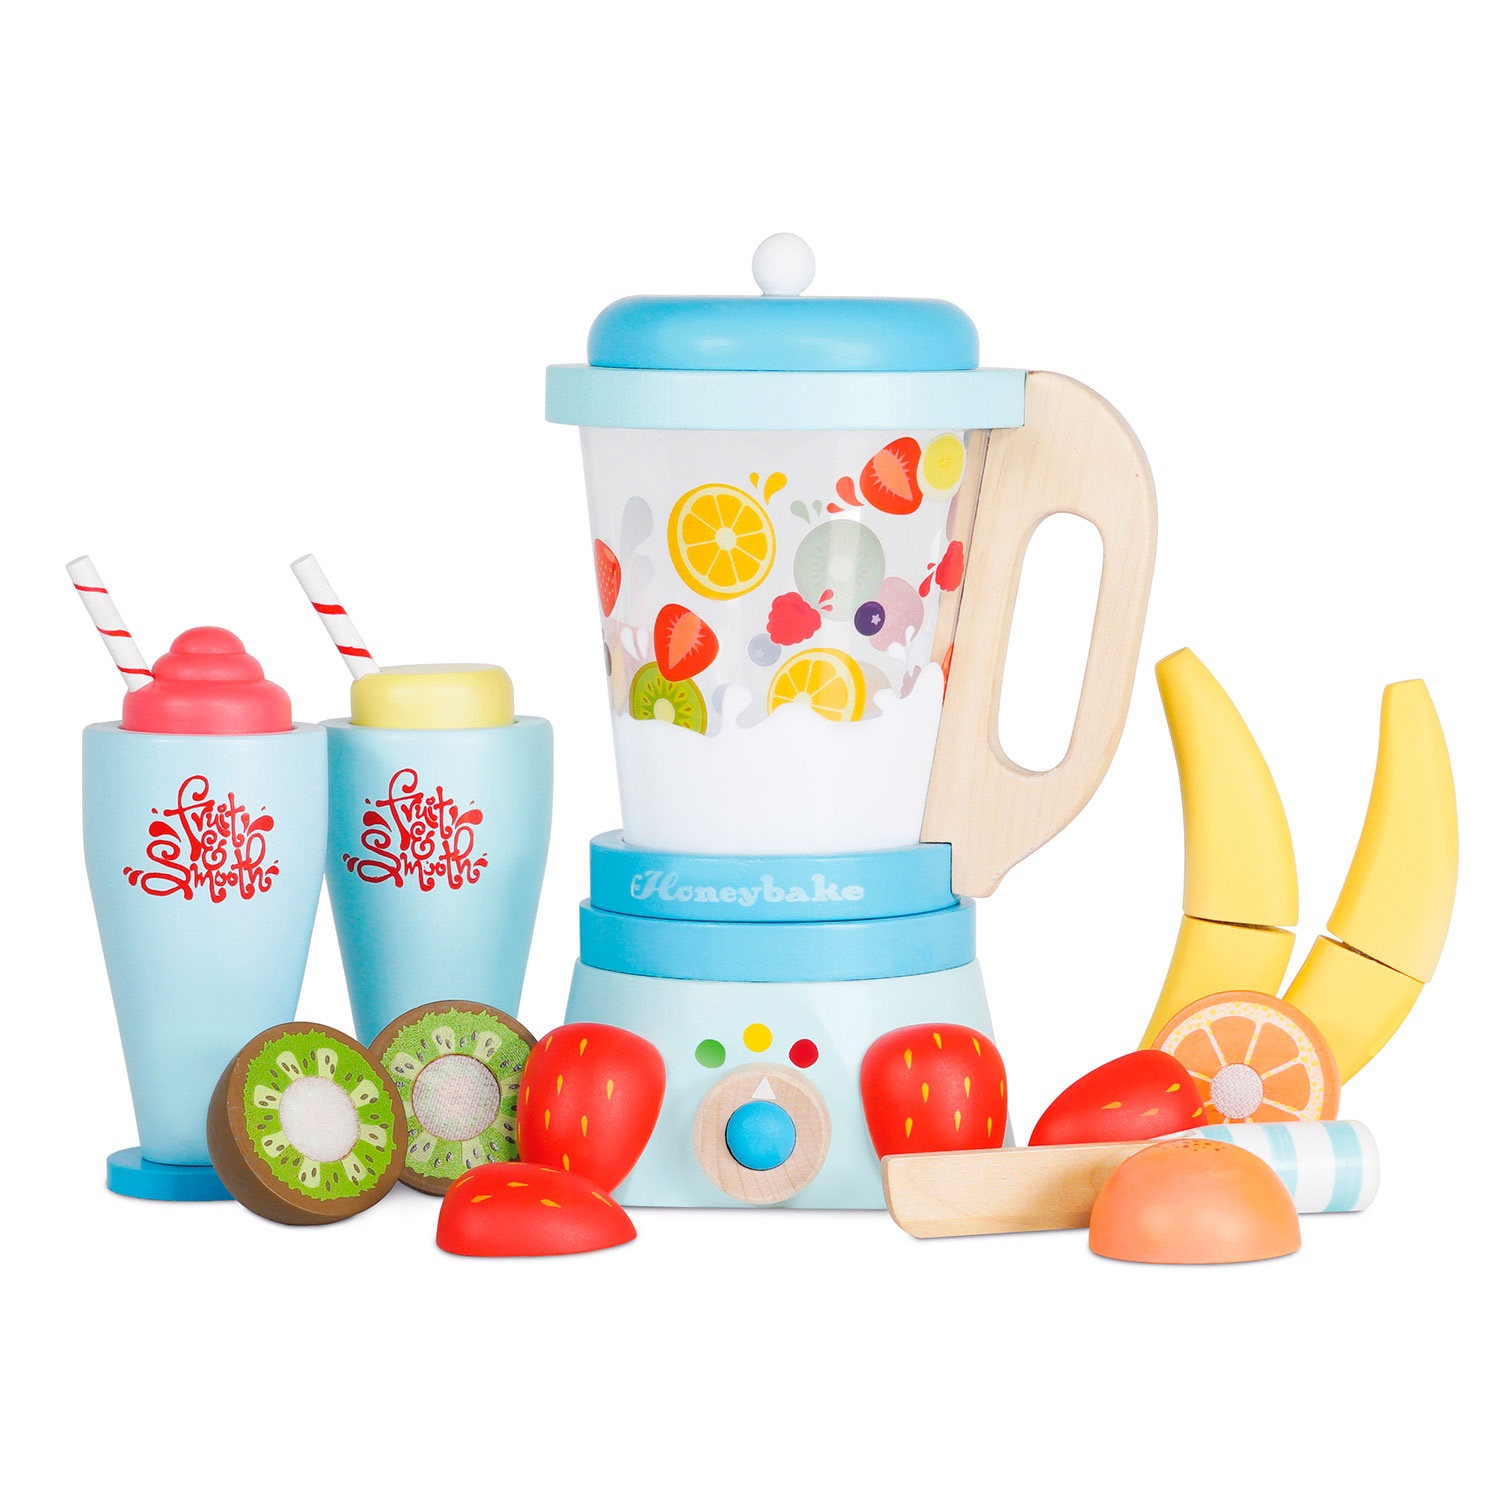 Frucht-Smoothy - Mixer Set / Fruit & Smoothie Blender Set